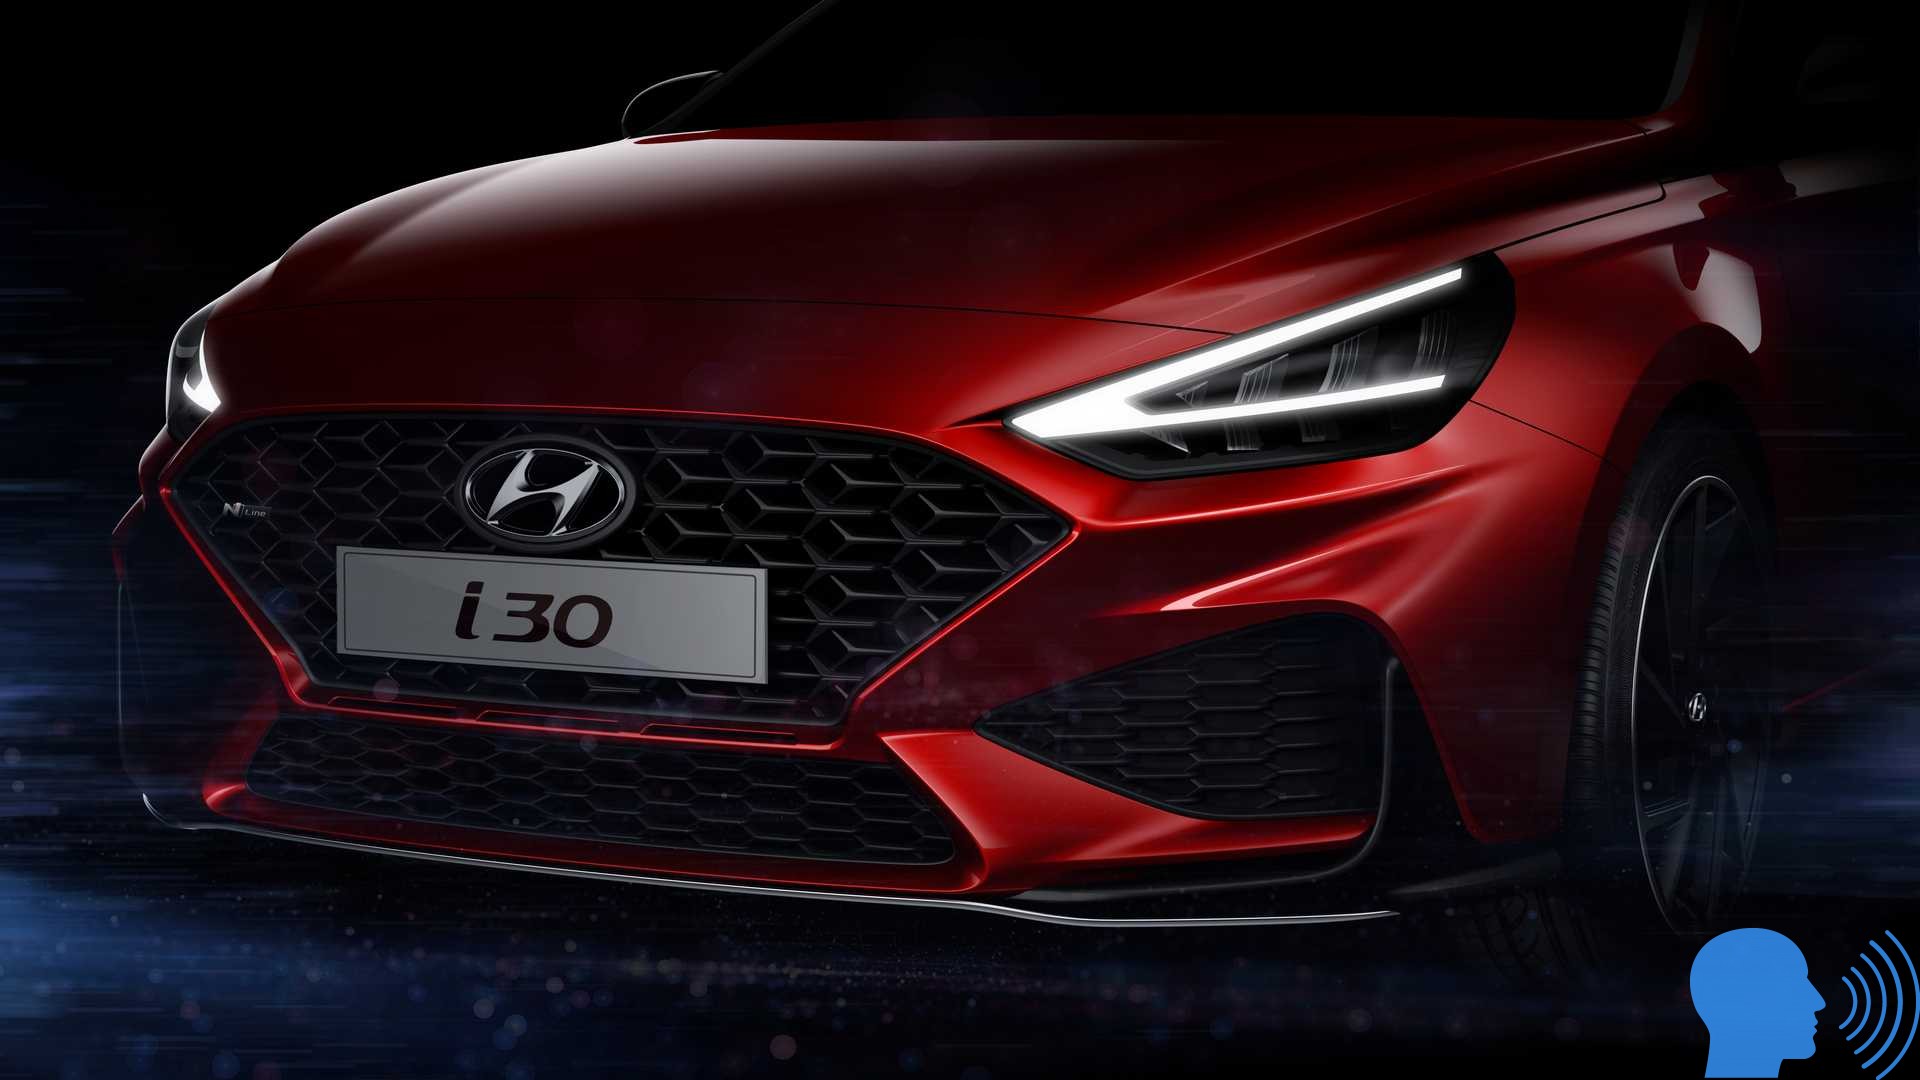 2020 Hyundai I30 Ne Zaman Tanitilacak Ve Nasil Olacak Teknotra